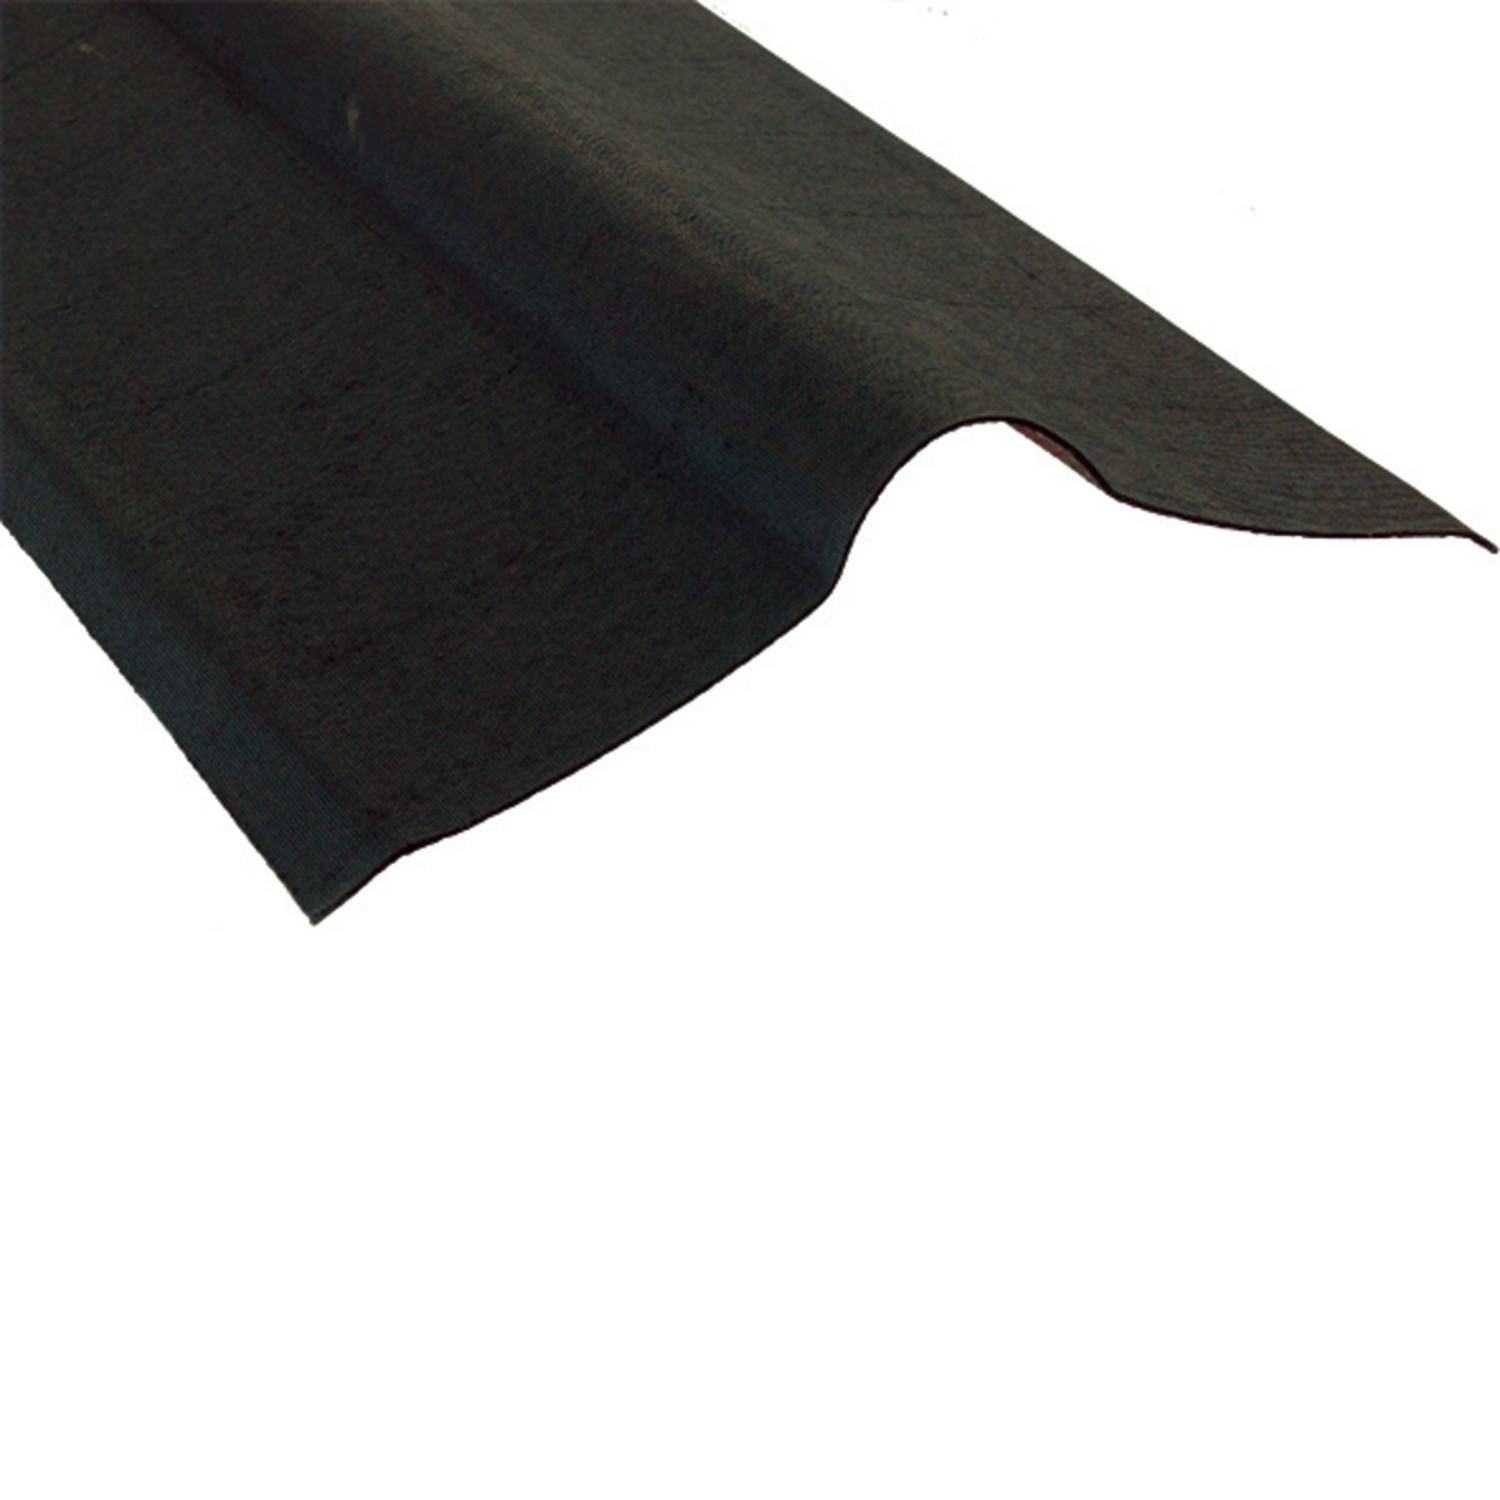 Onduline Verge 1000mm Long Bitumen Roof Sheets Various Colours